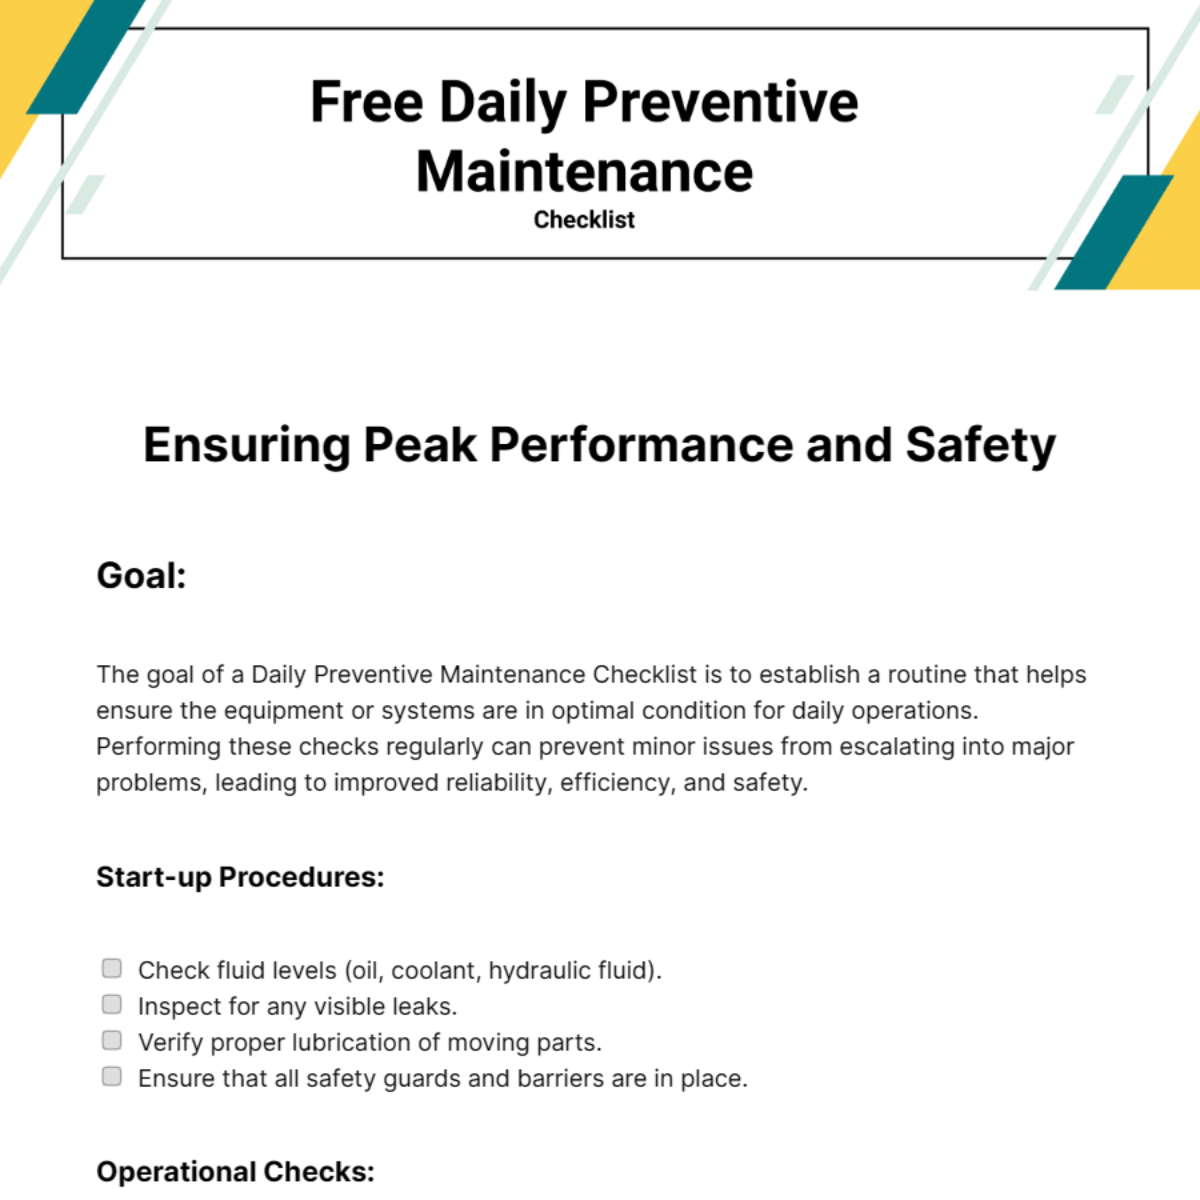 Free Daily Preventive Maintenance Checklist Template